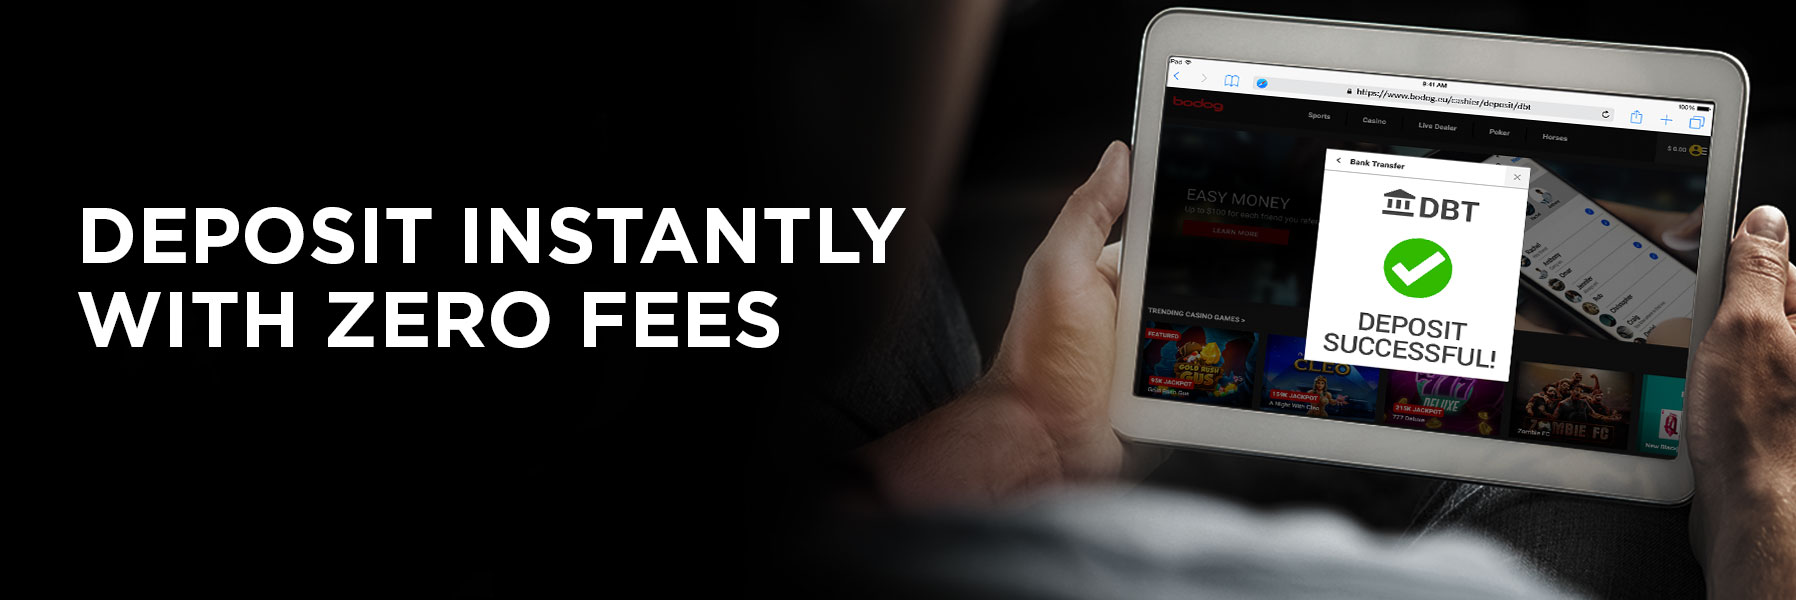 Deposit instantly with zero fees.